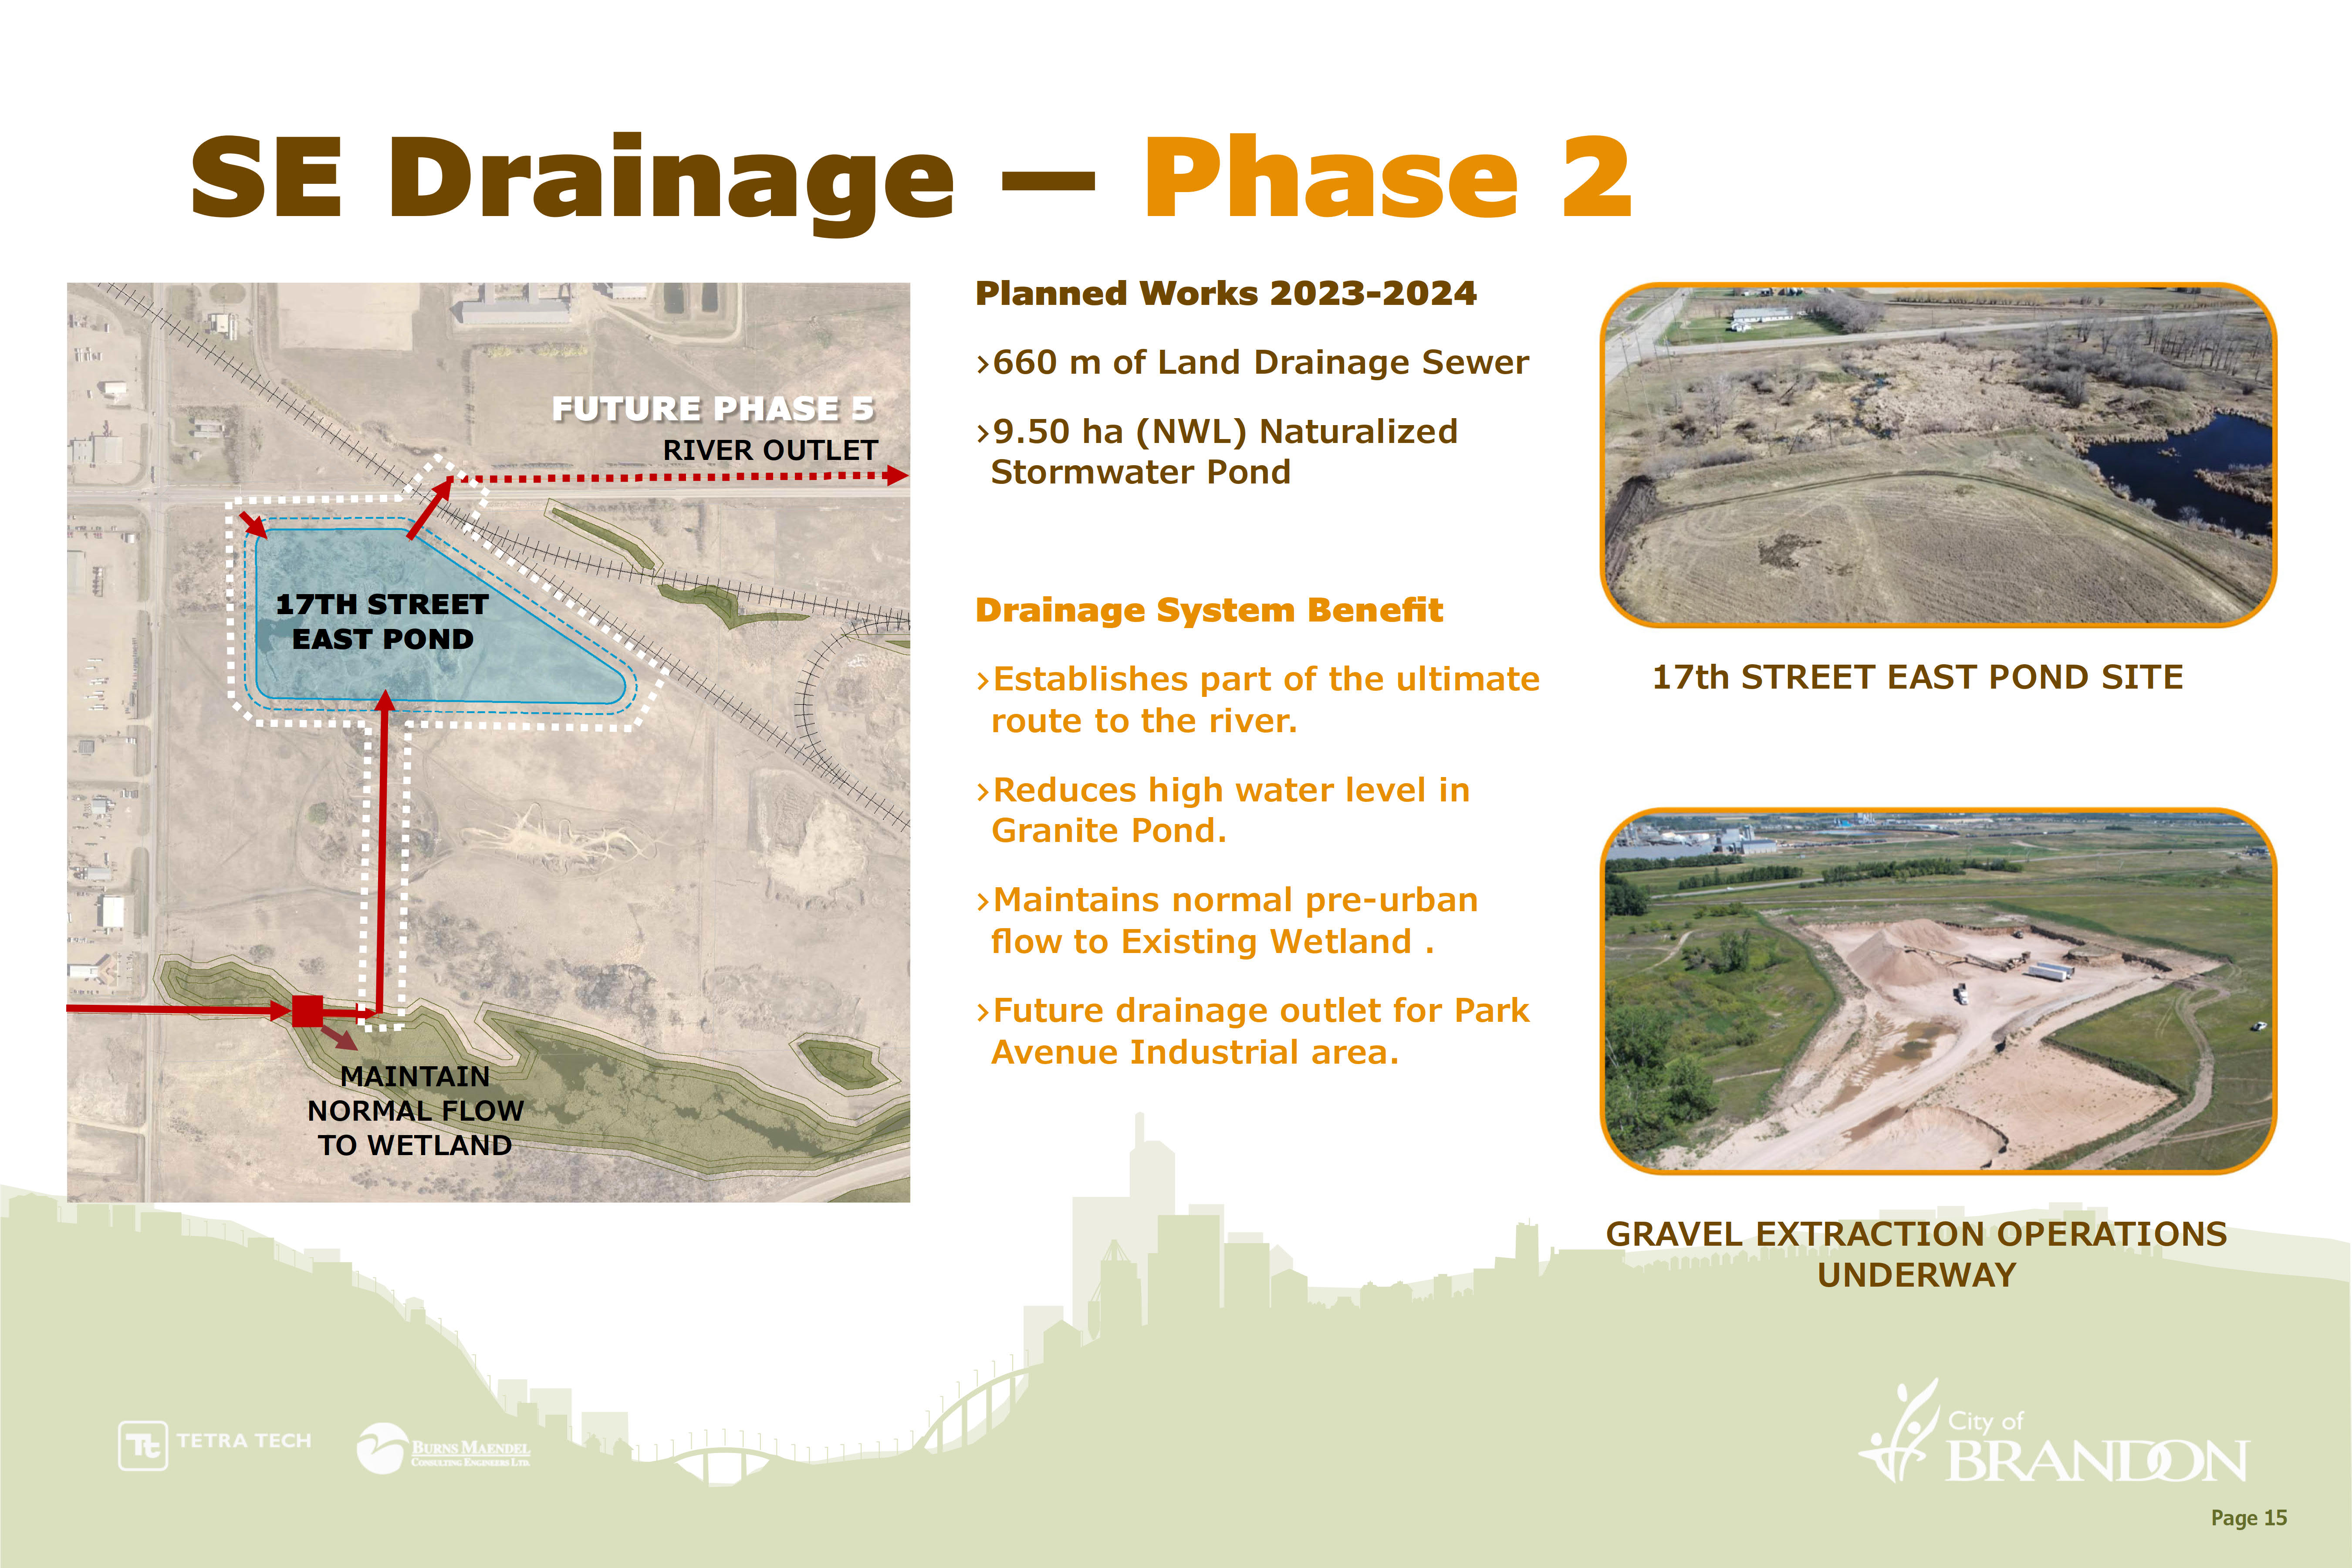 Southeast Drainage - Phase 2